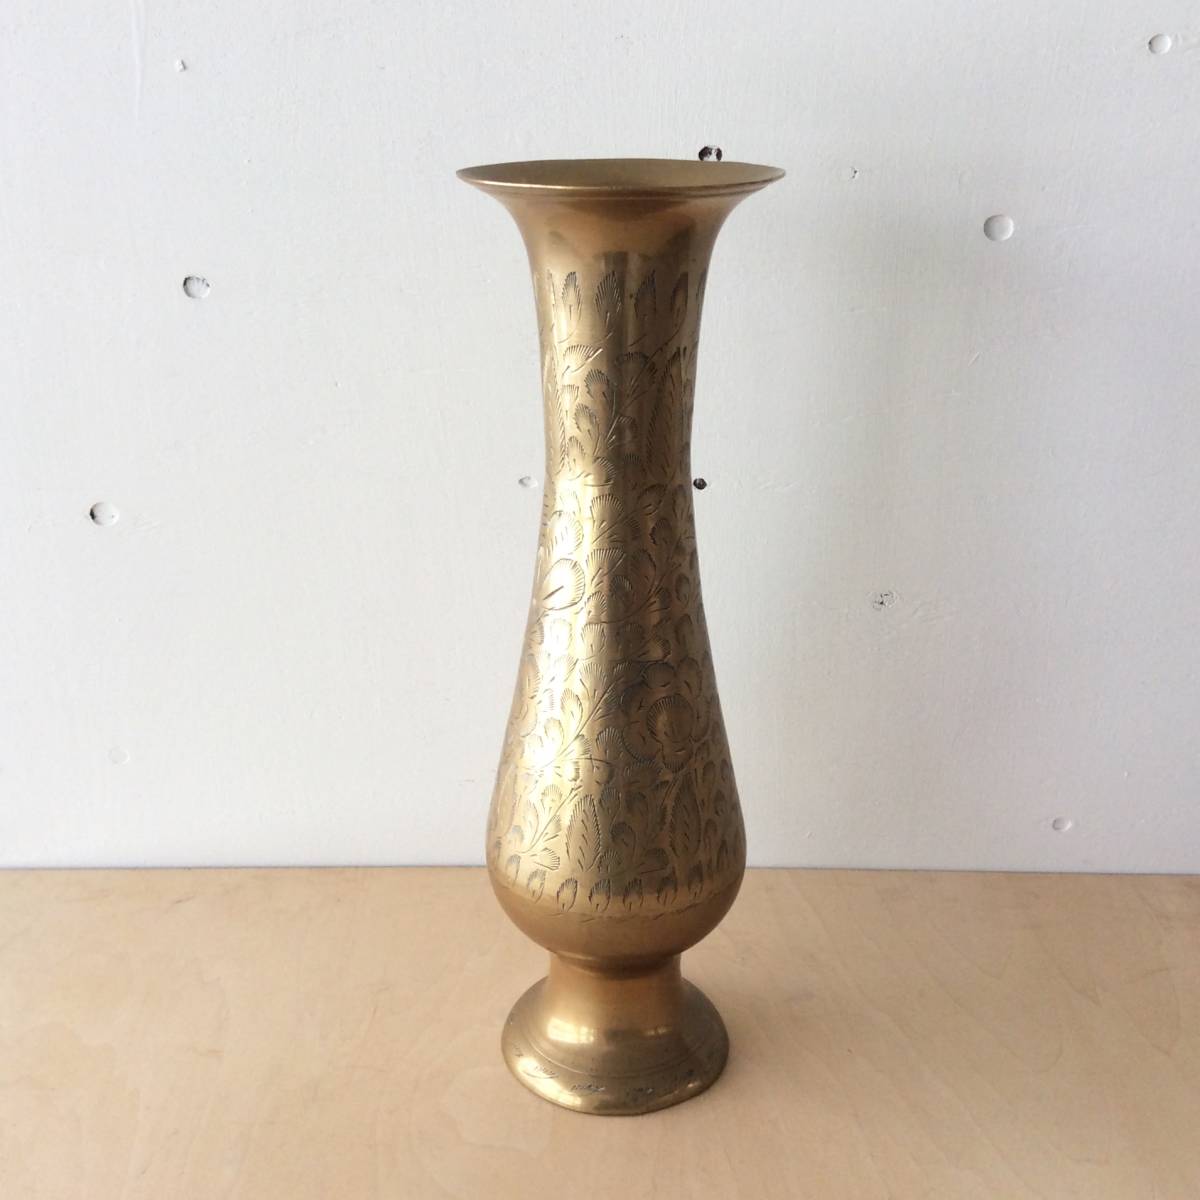 ヤフオク! -真鍮製 花瓶(工芸品)の中古品・新品・未使用品一覧